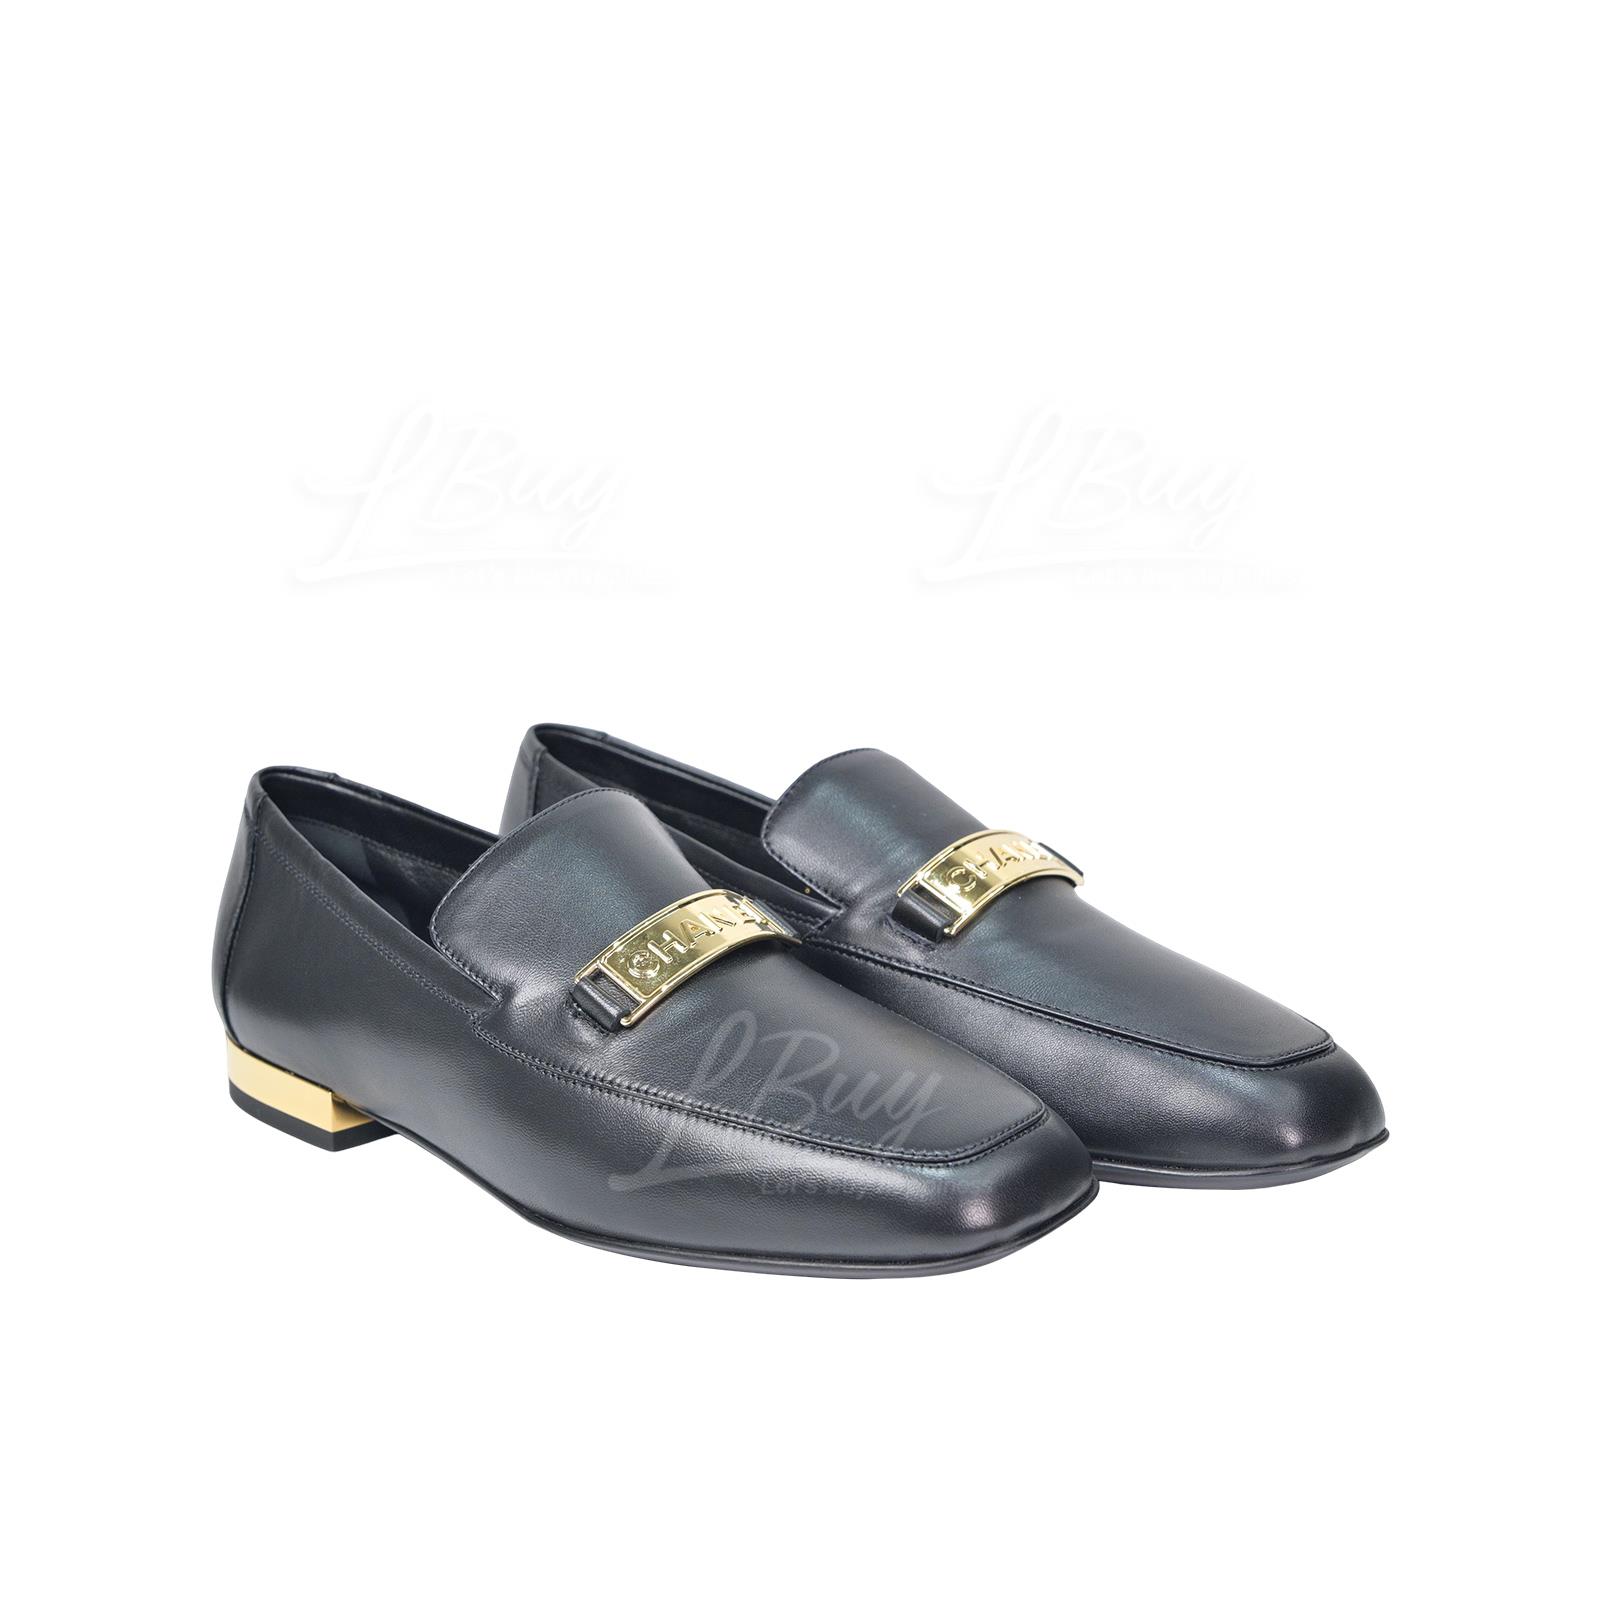 Chanel Metallic Gold Logo Black Leather Flats Shoes G39188